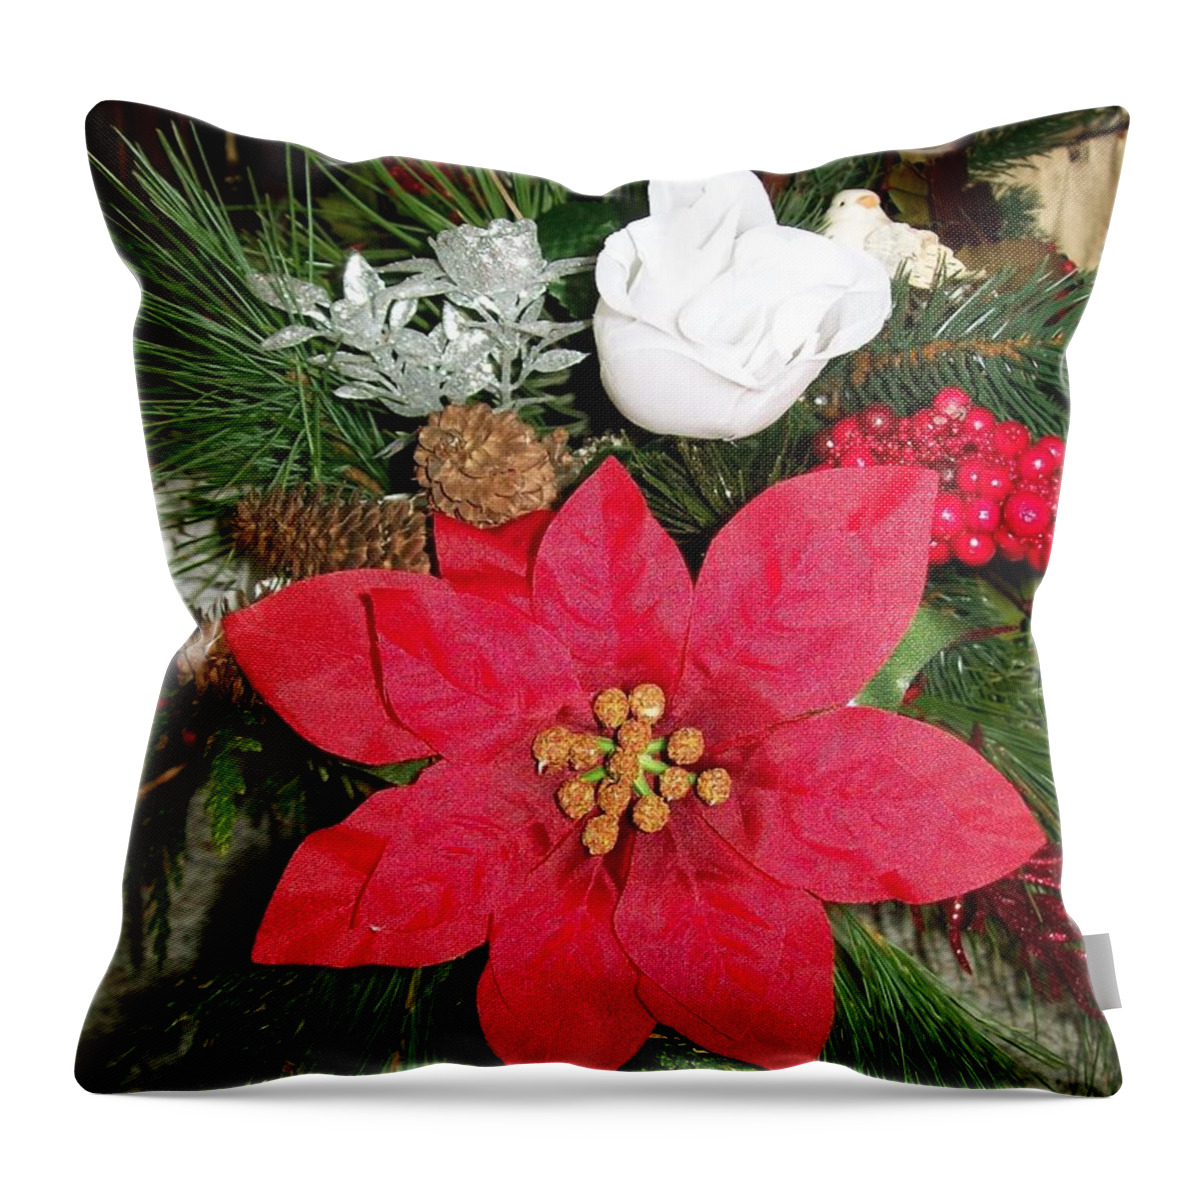 Poinsettia Throw Pillow featuring the photograph Christmas Centerpiece by Sharon Duguay